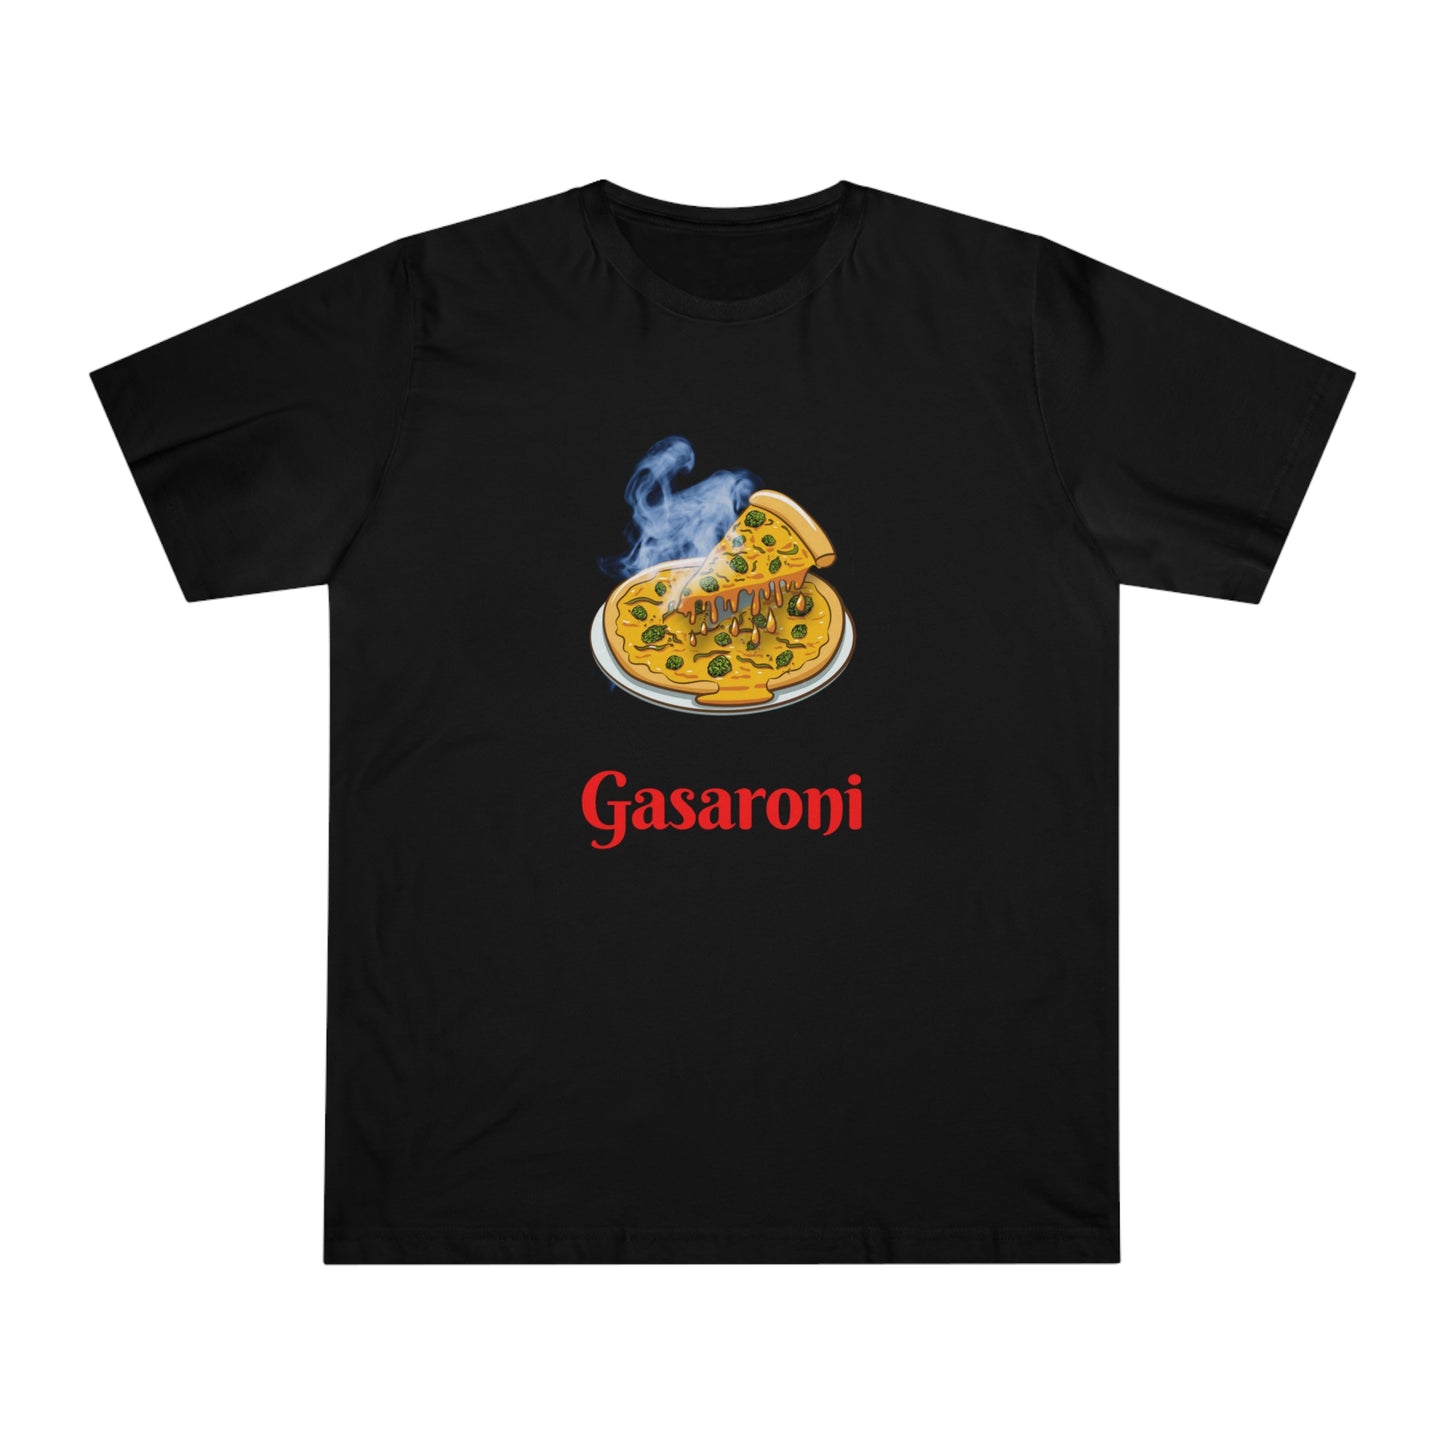 Gasaroni "Smokin' Hot" T-Shirt